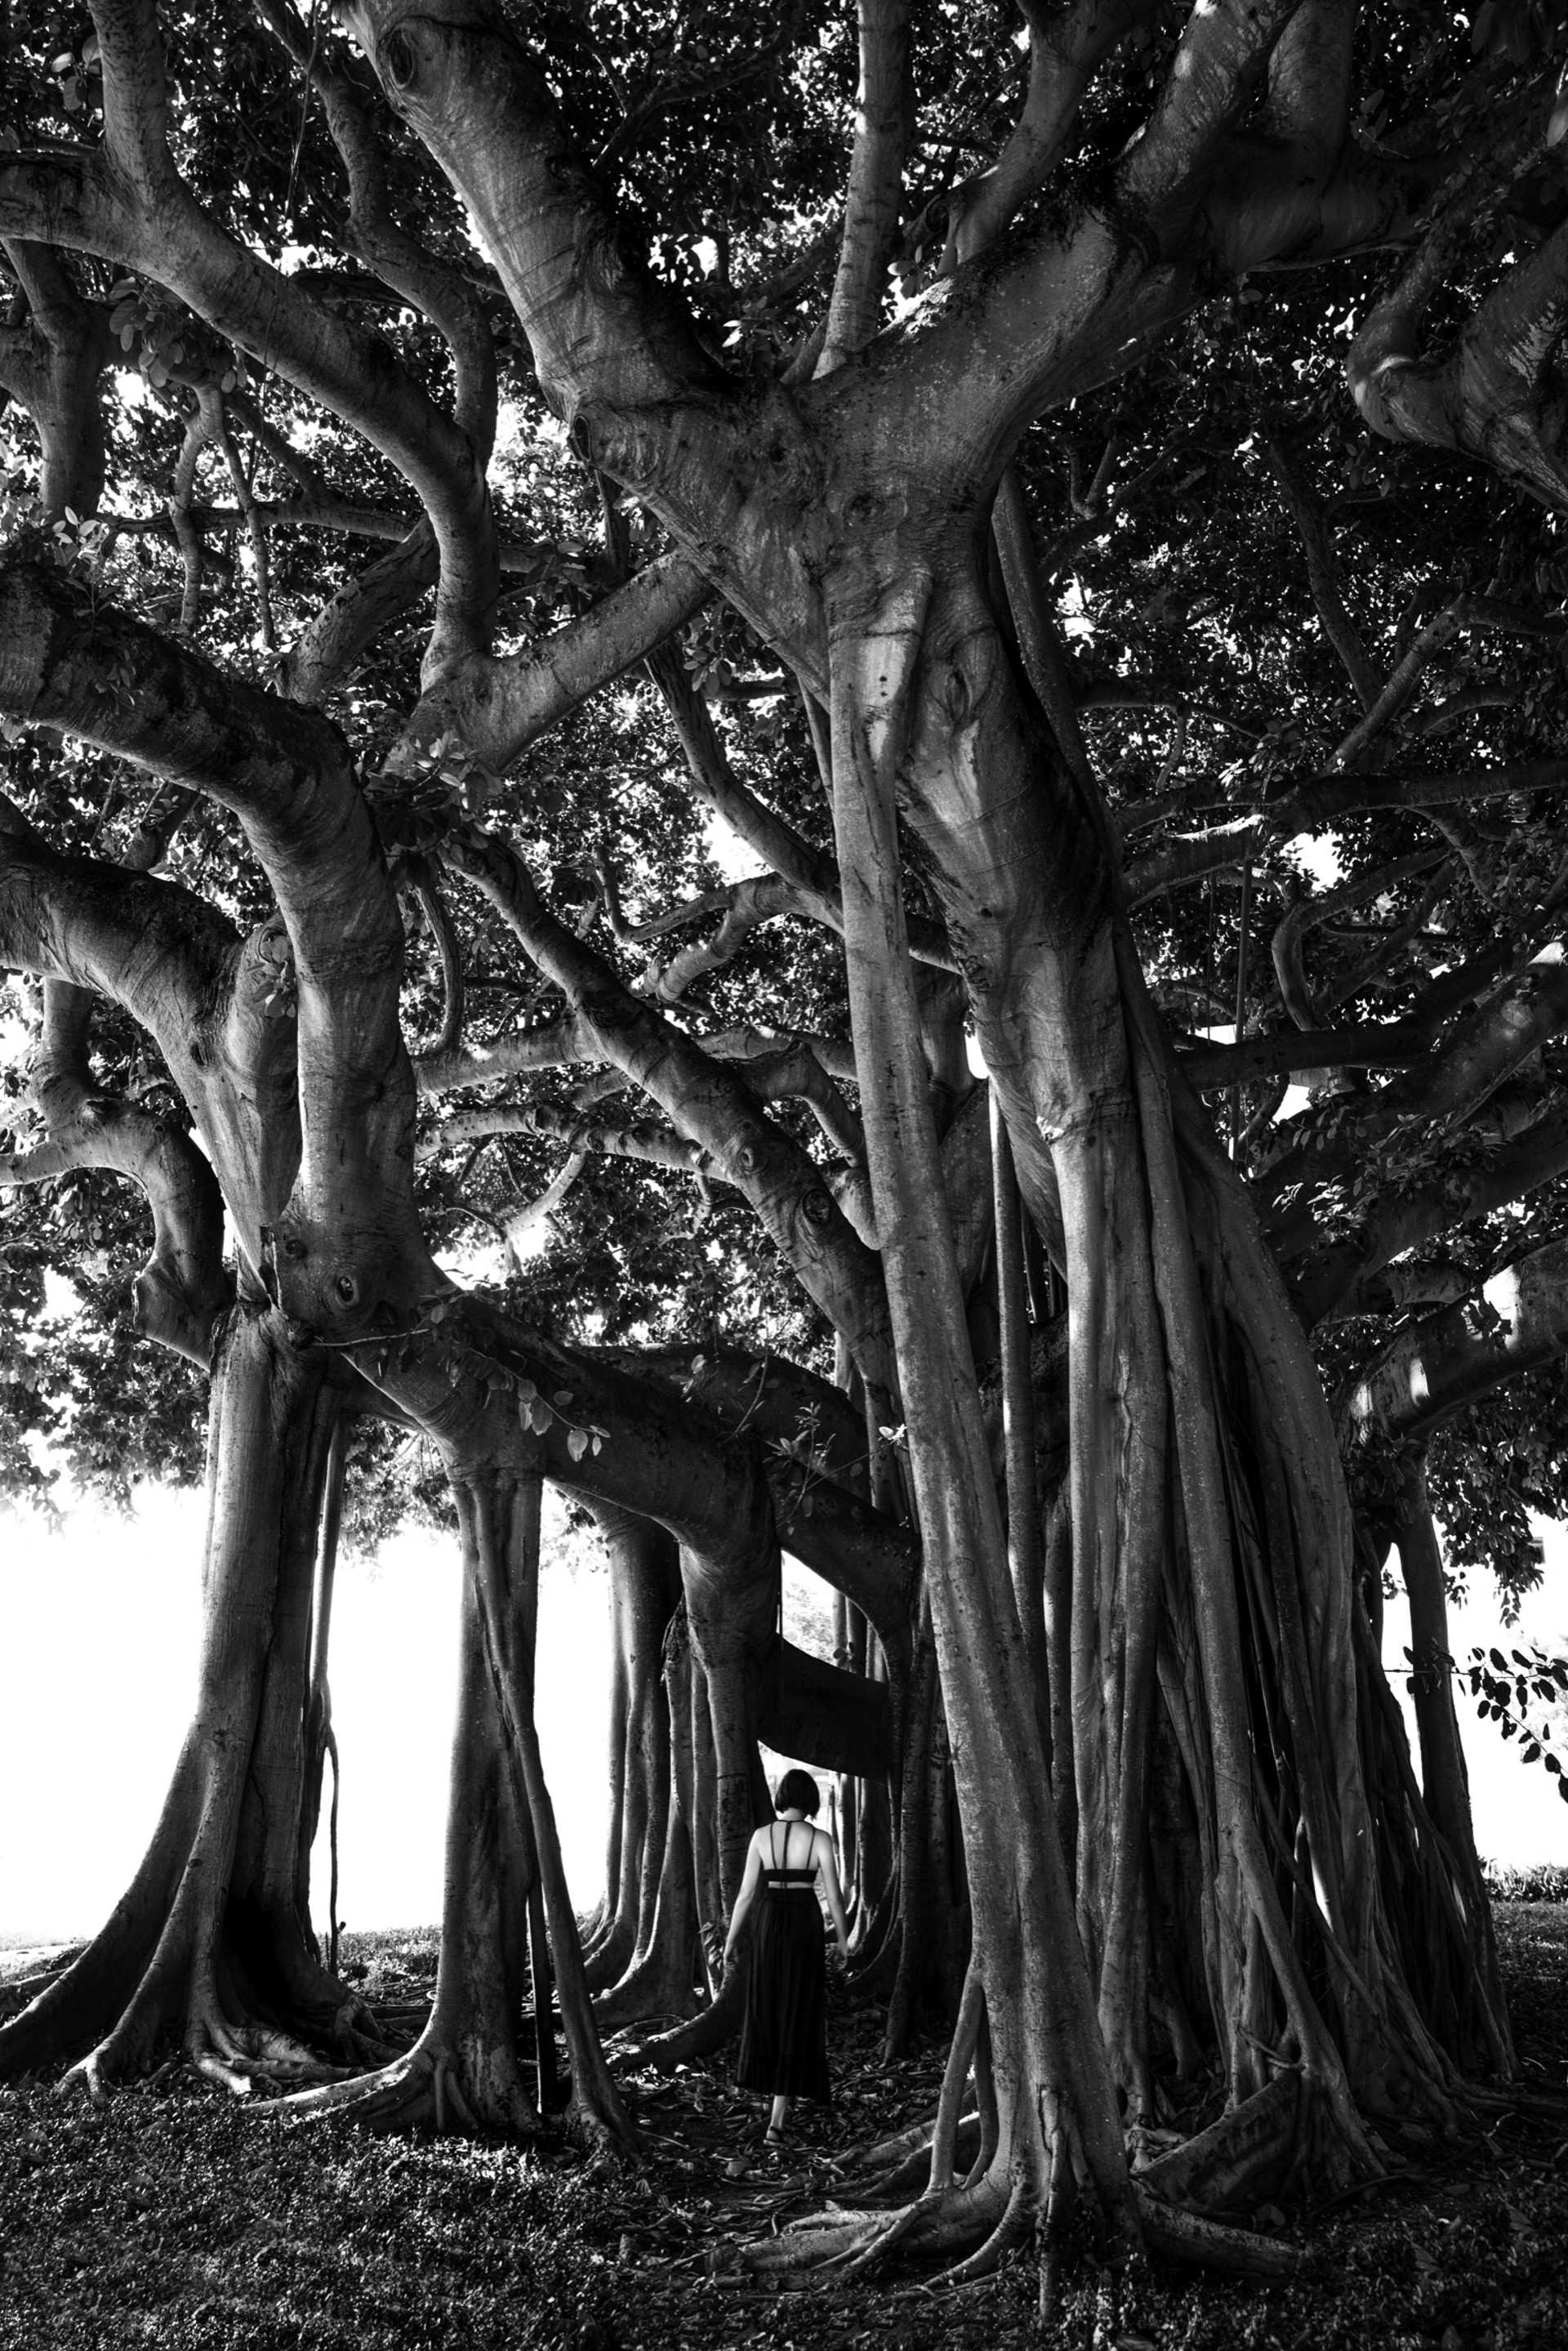 Under the Banyan Tree by Rob Brinson